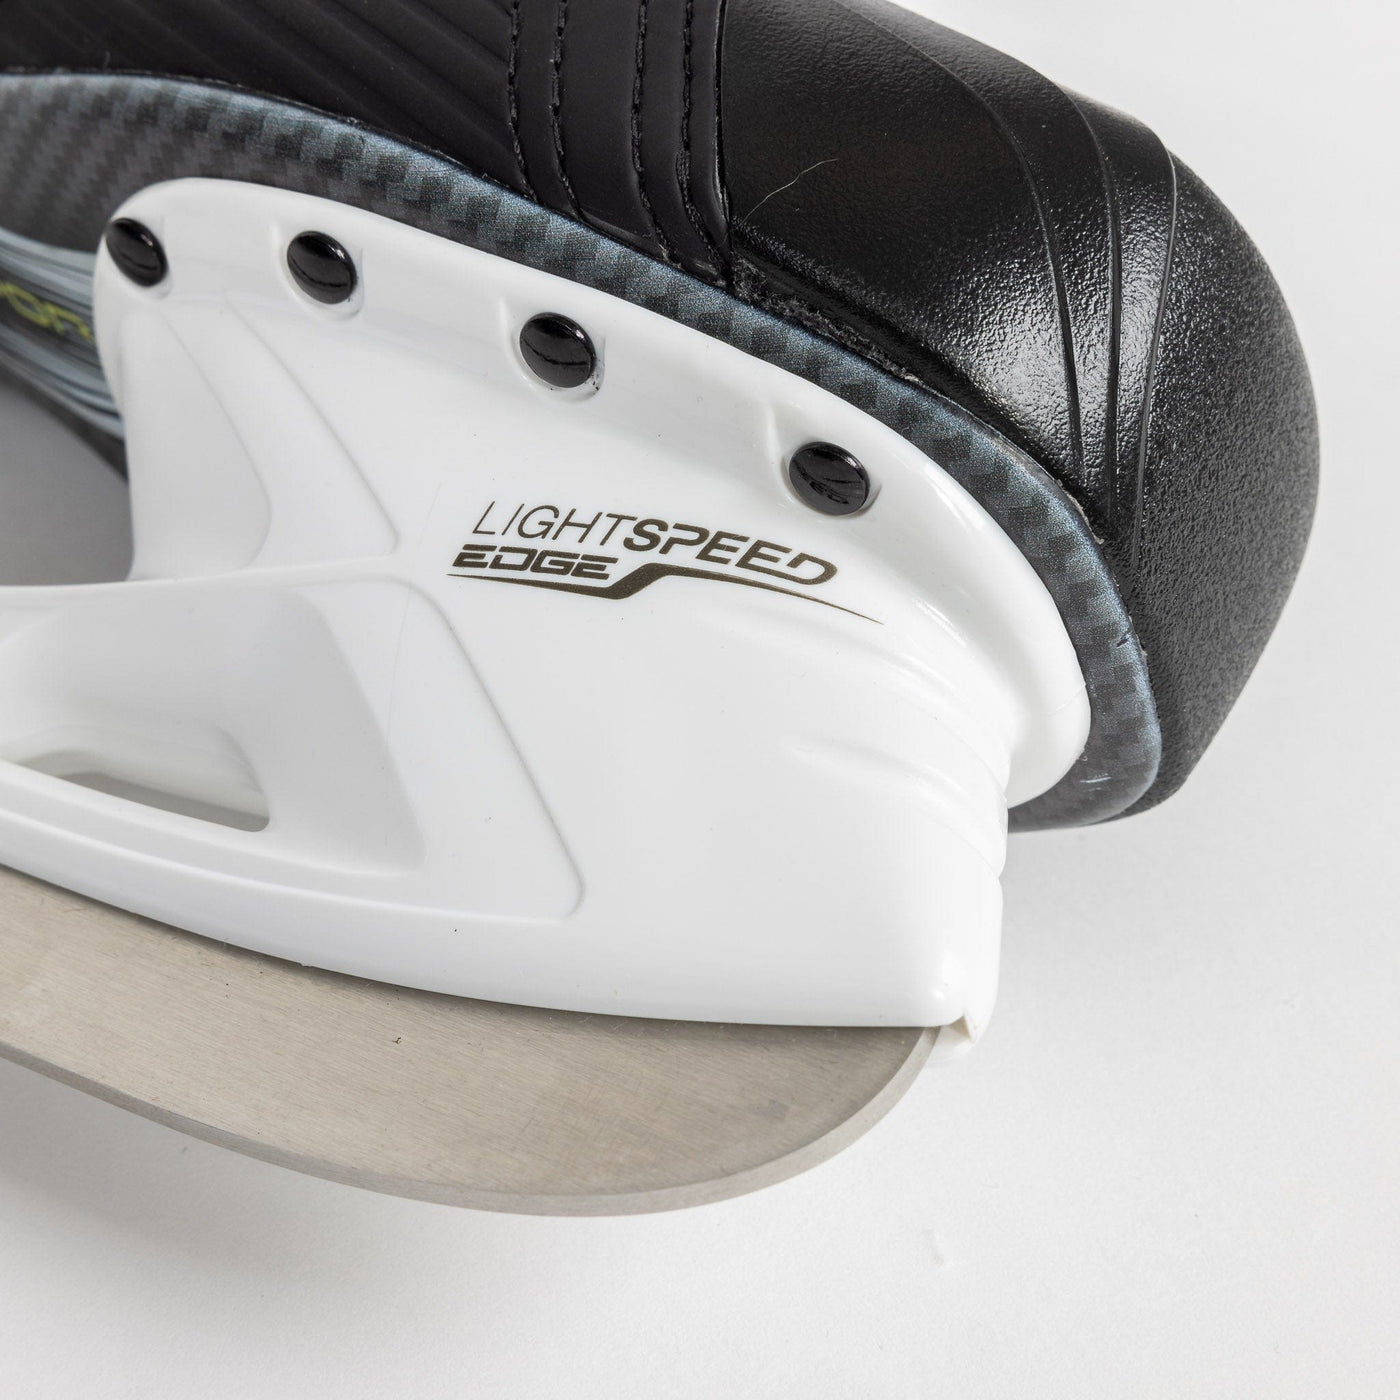 Bauer Vapor X3 Intermediate Hockey Skates - The Hockey Shop Source For Sports